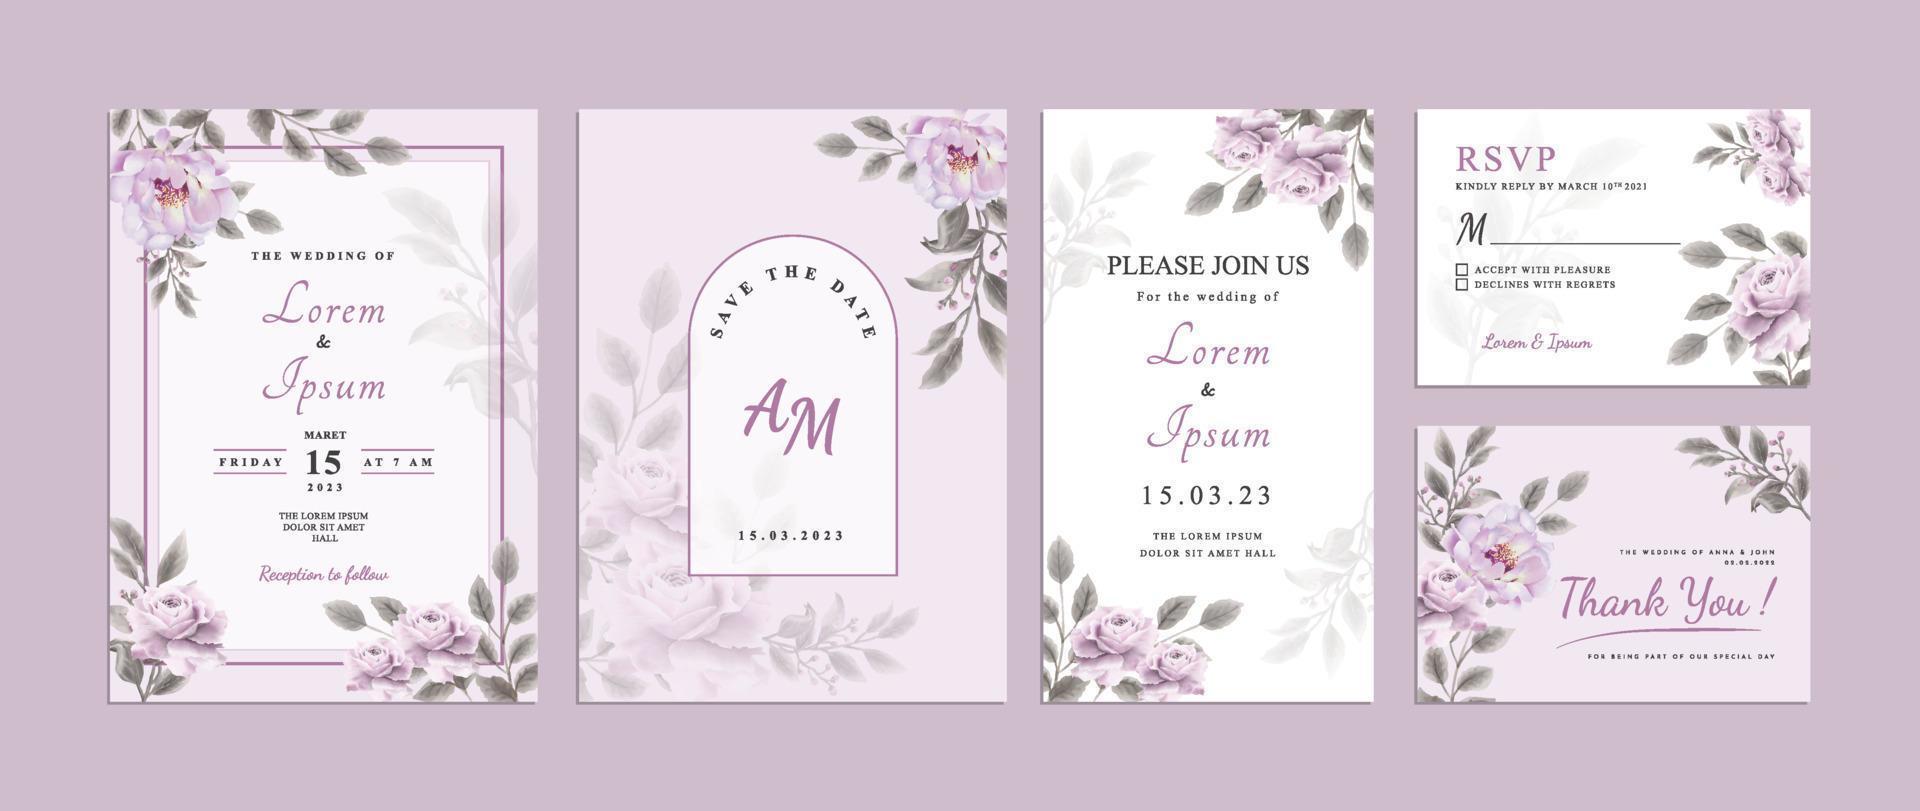 Elegant Floral Hand Drawn Wedding Invitation Card Template vector